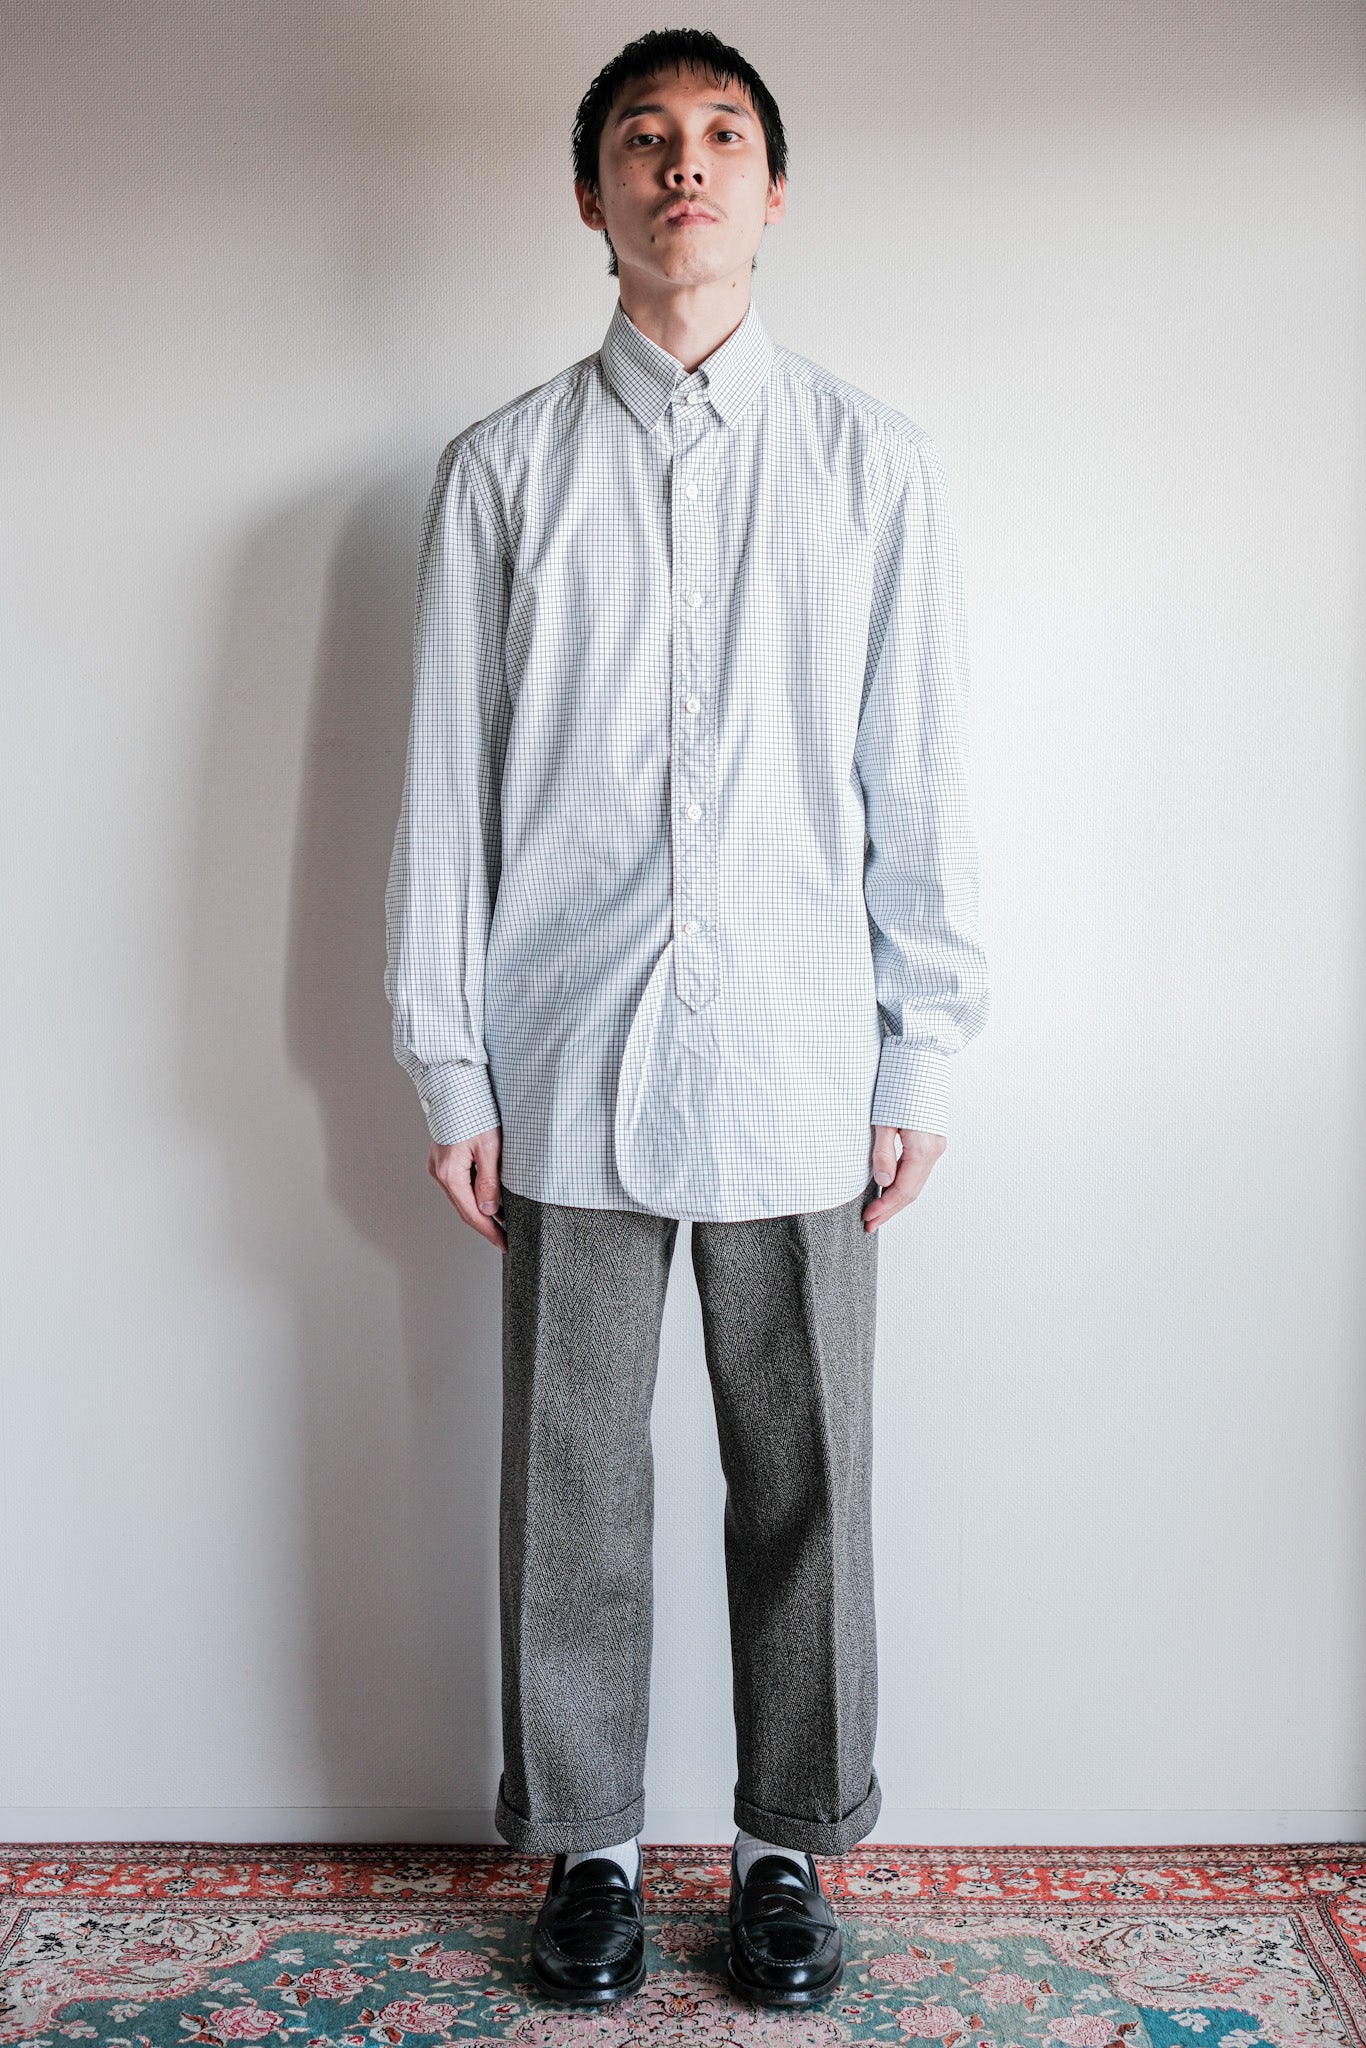 【~00's】Old ARNYS PARIS Cotton Checked Dress Shirt Size.39